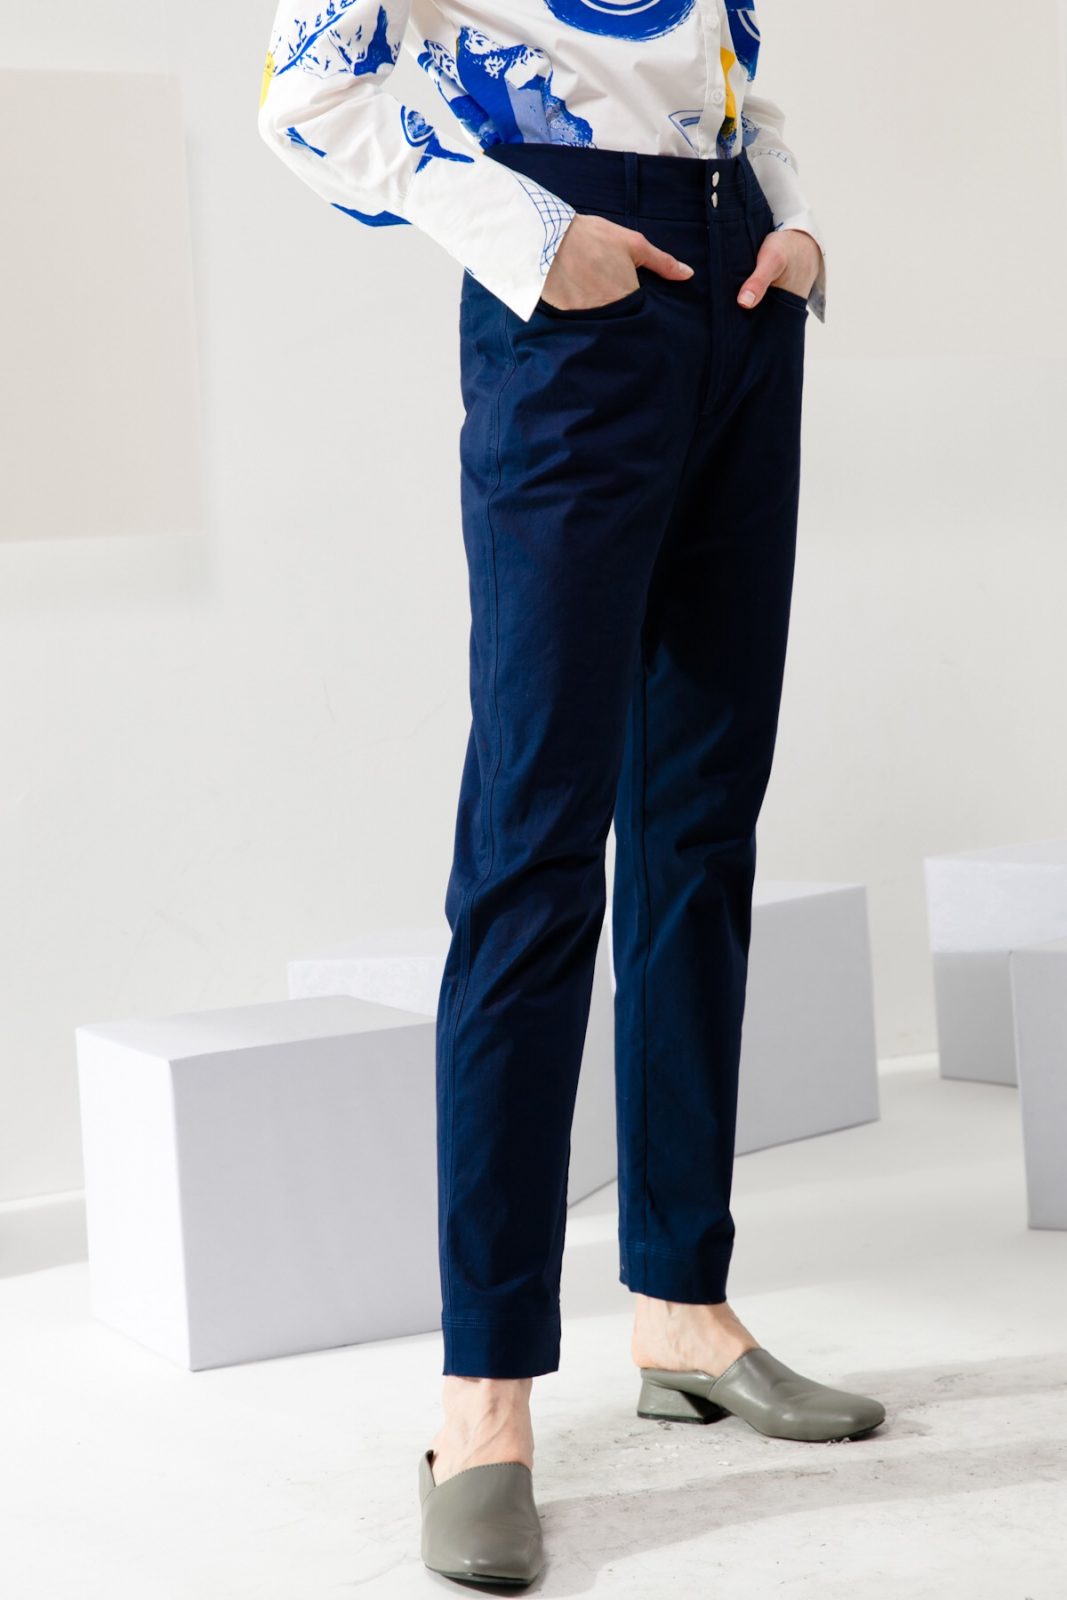 SKYE modern minimalist women clothing fashion Elise Pants blue 3